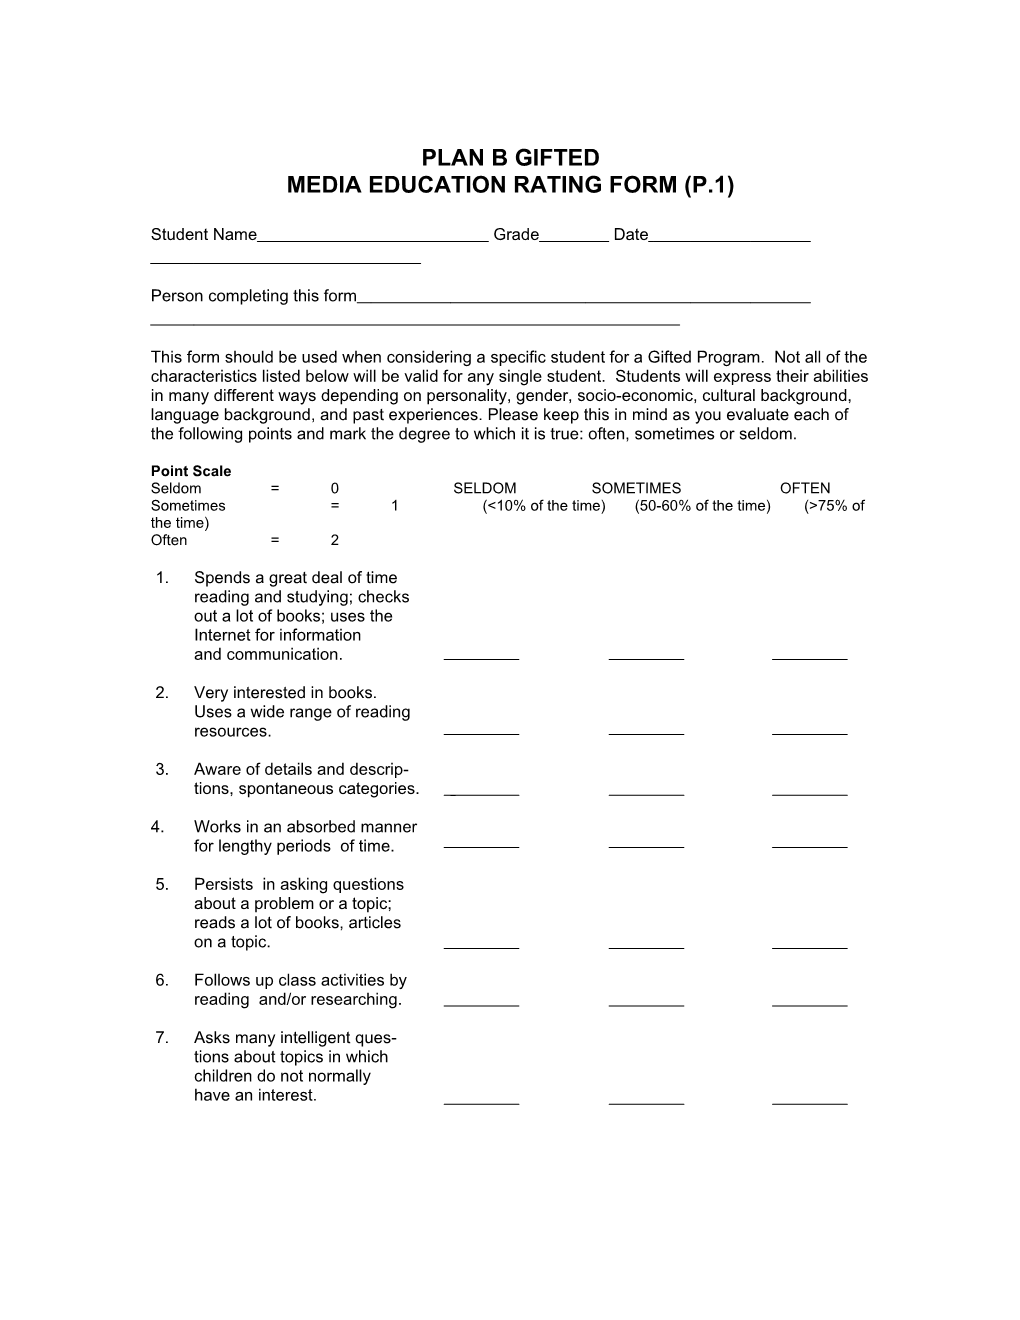 Media Education Rating Form (P.1)